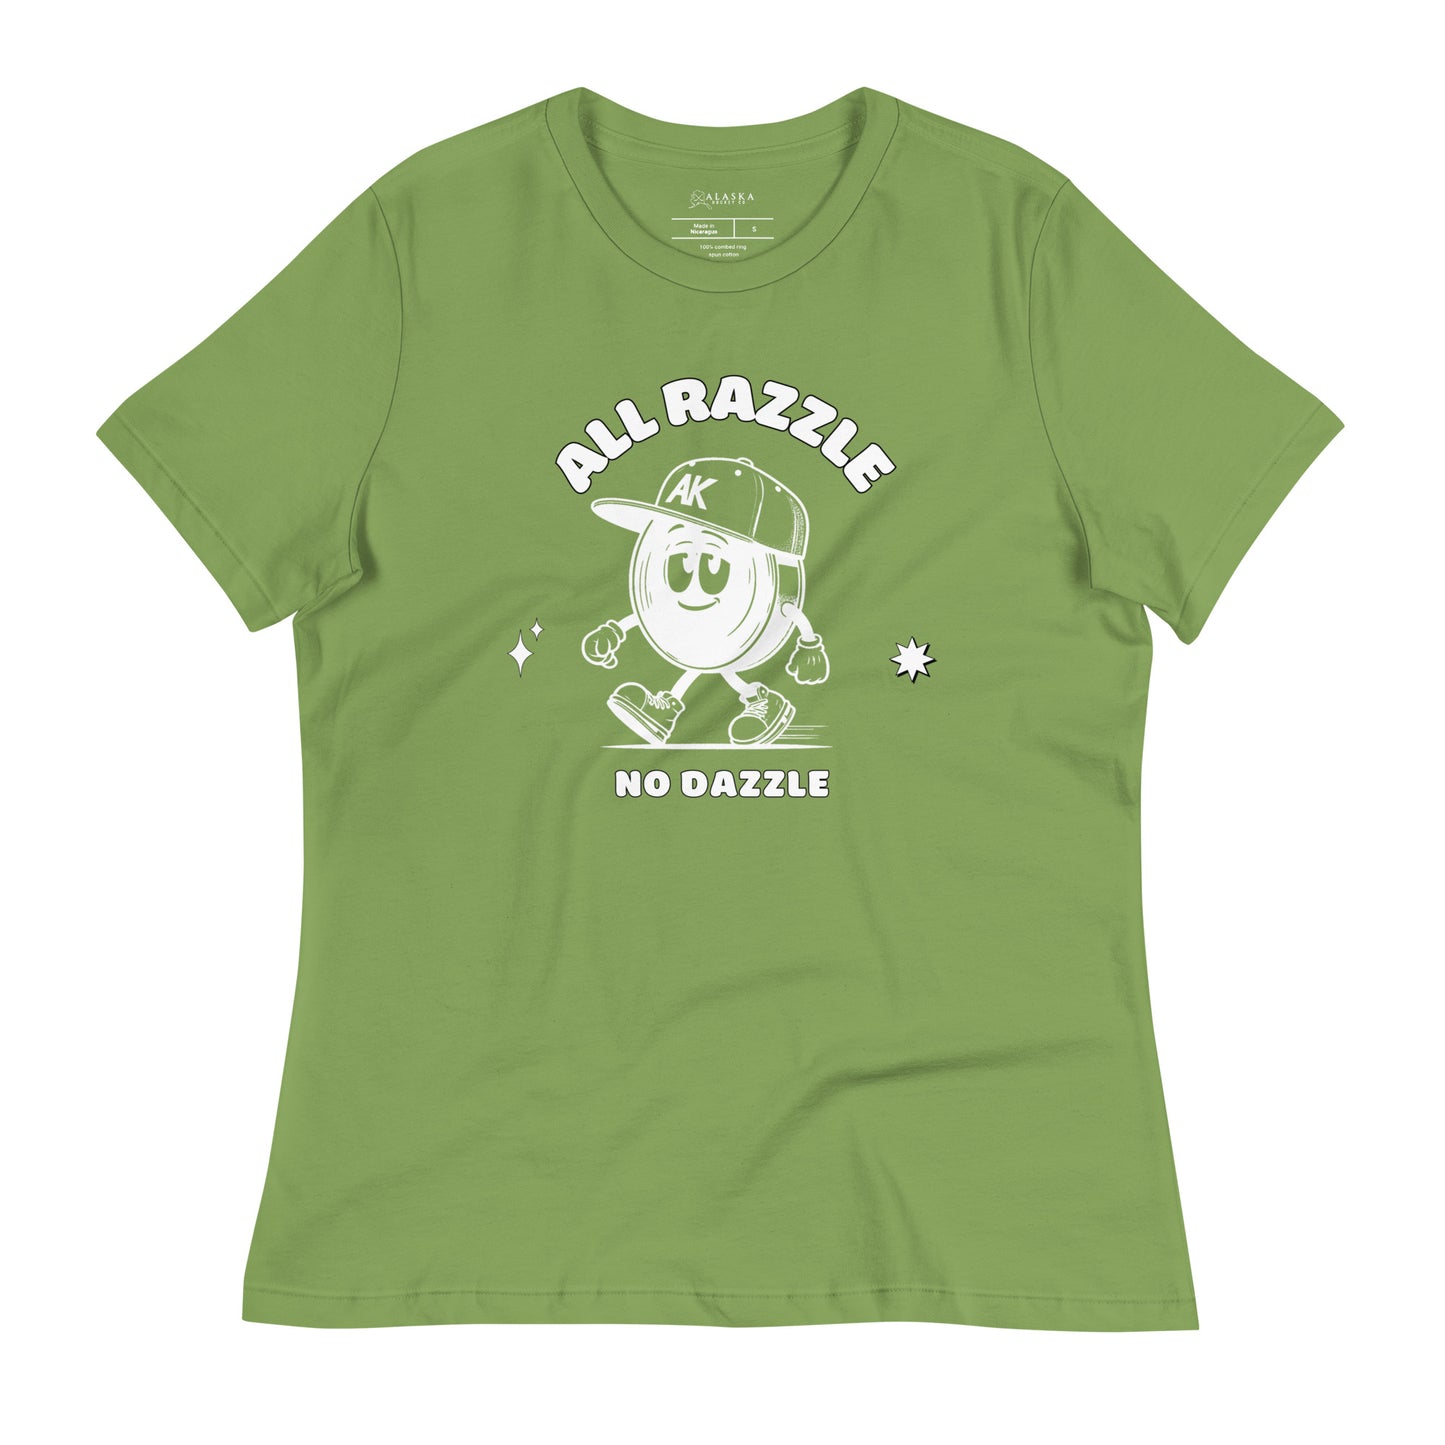 Razzle Dazzle Women's Relaxed T-Shirt